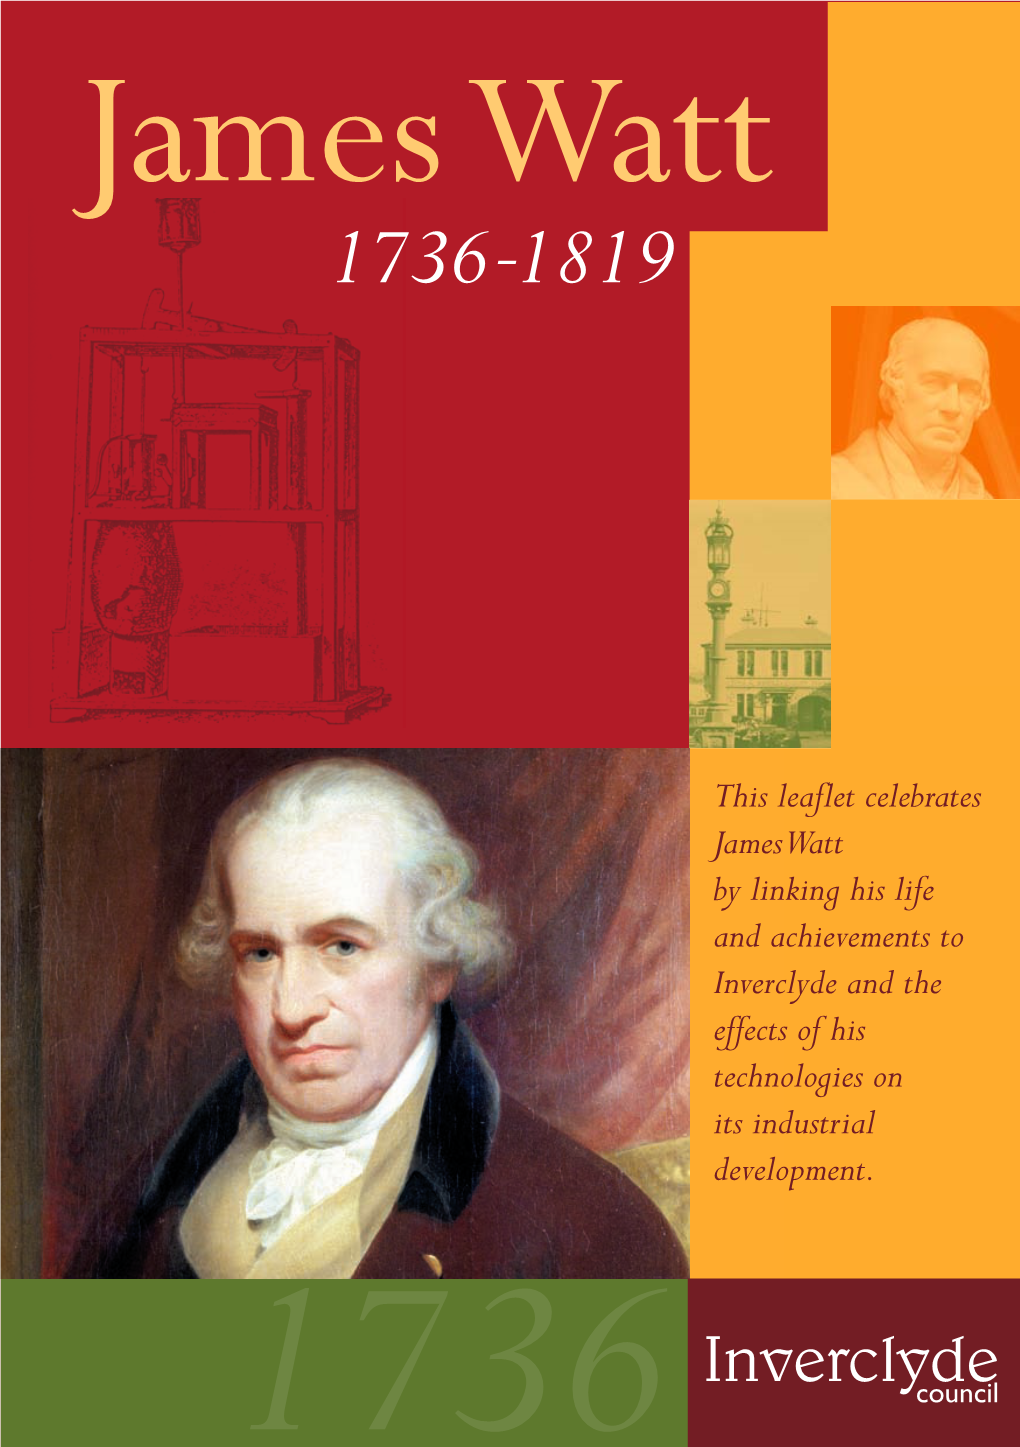 James Watt Historical Leaflet